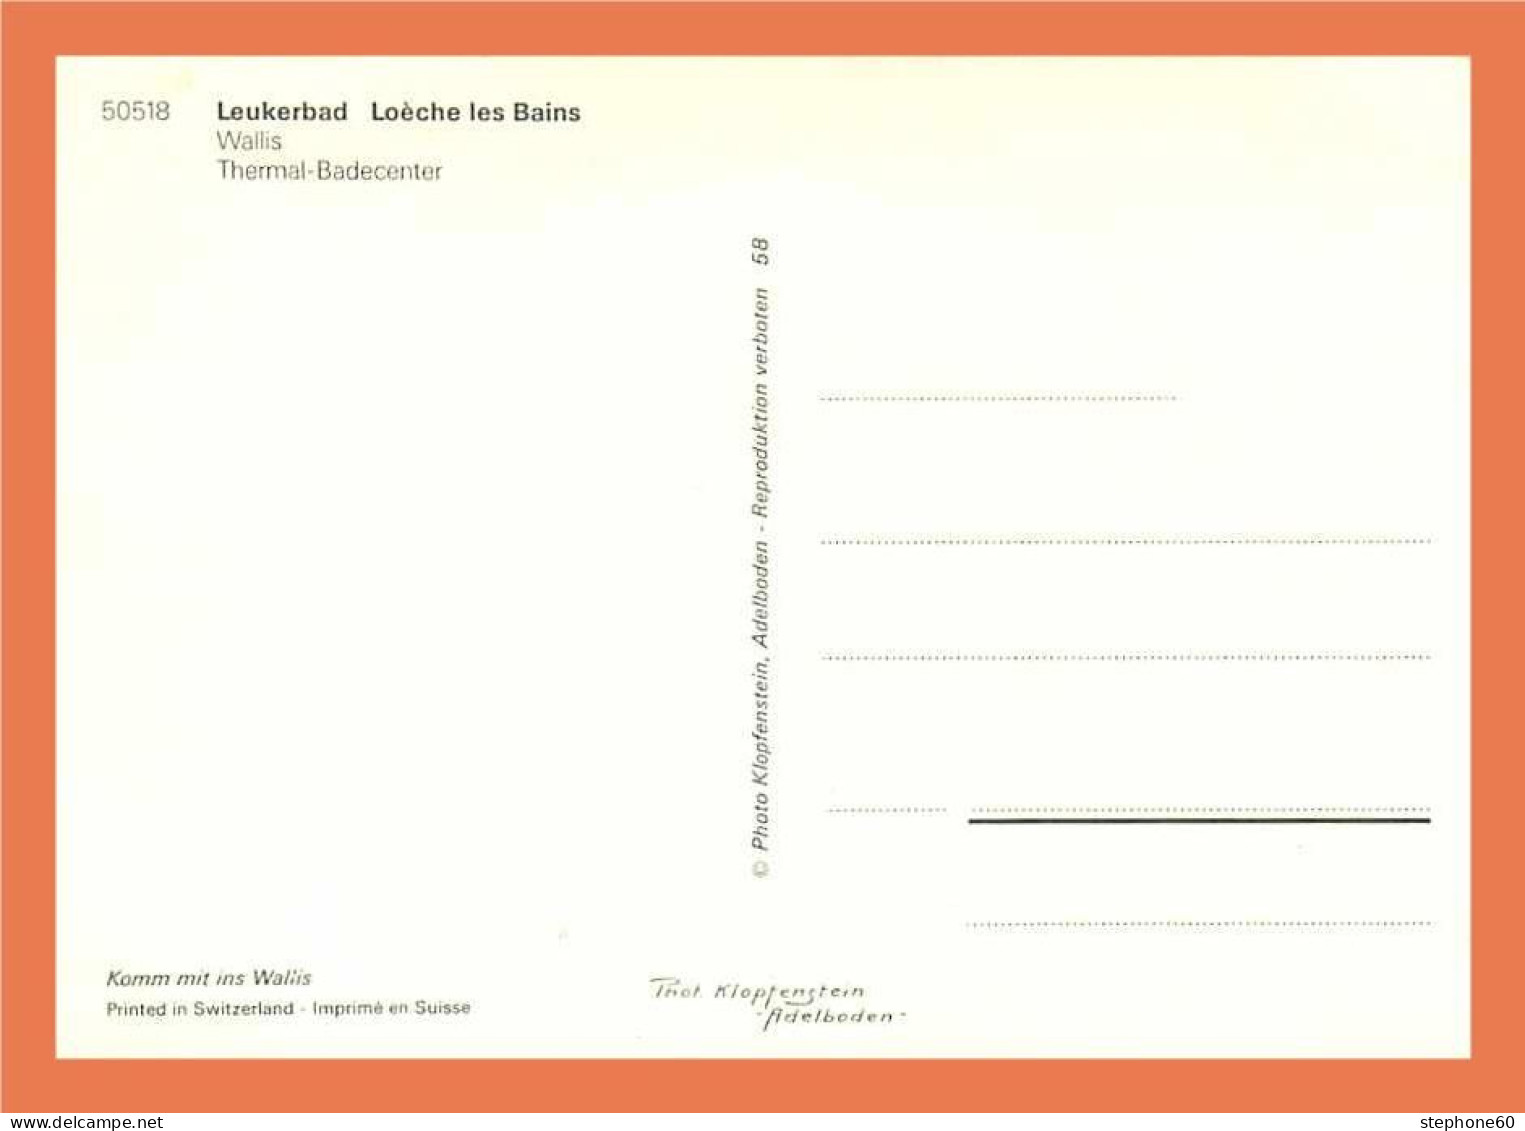 A144 / 359 LEUKBAD - LOECHE LES BAINS - Wallis - Thermal Badecenter - Loèche